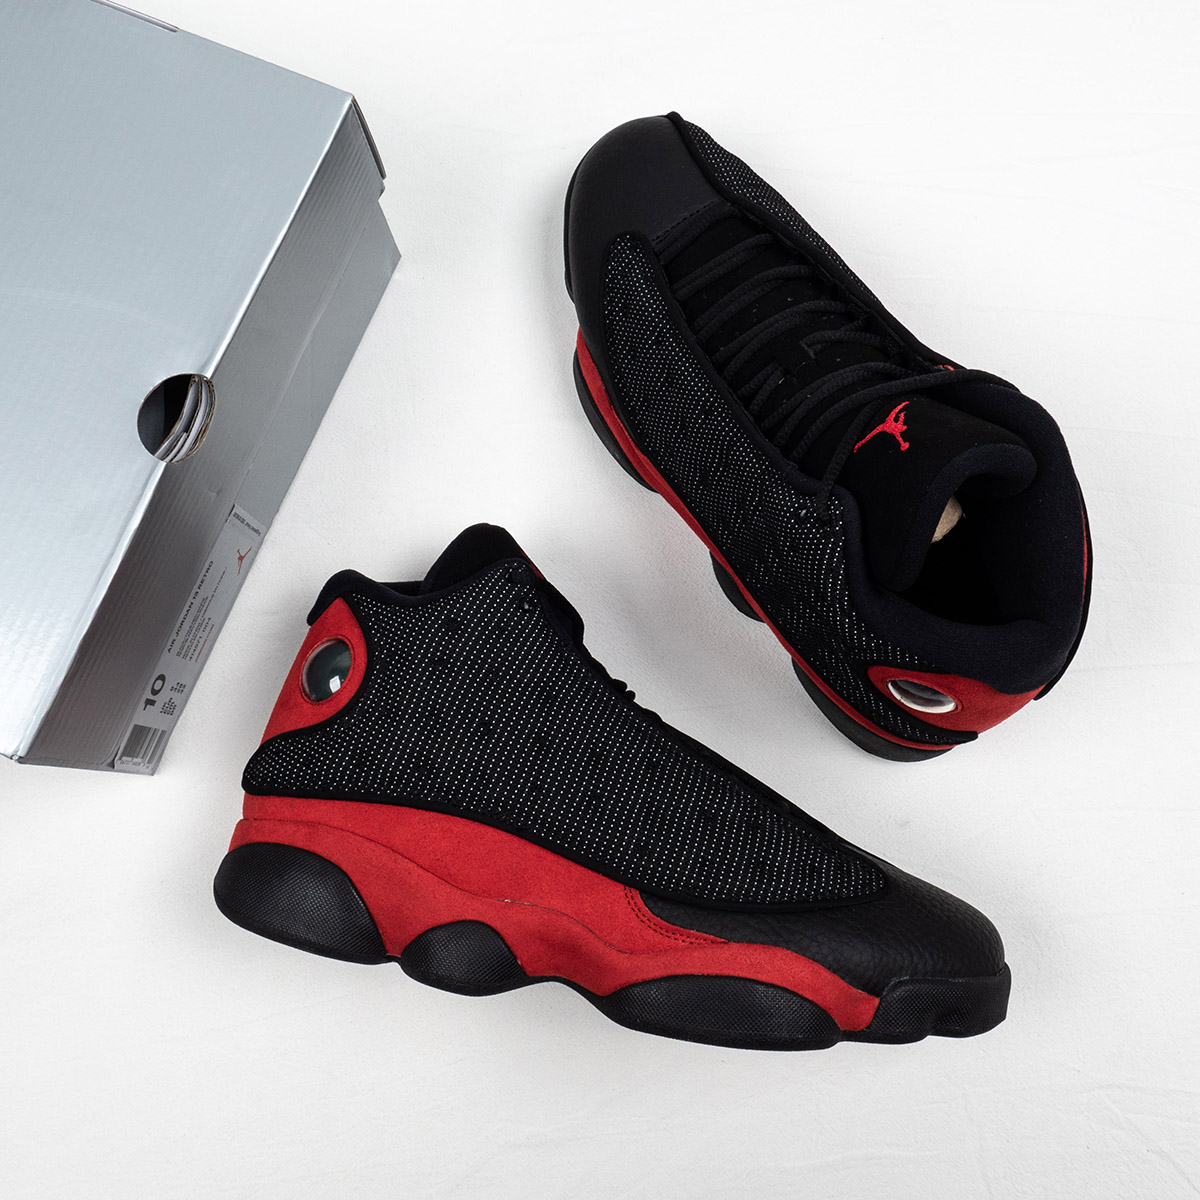 Air JD Jordan 13 "Bred" Black/True Red-White 414571-004 Shoes